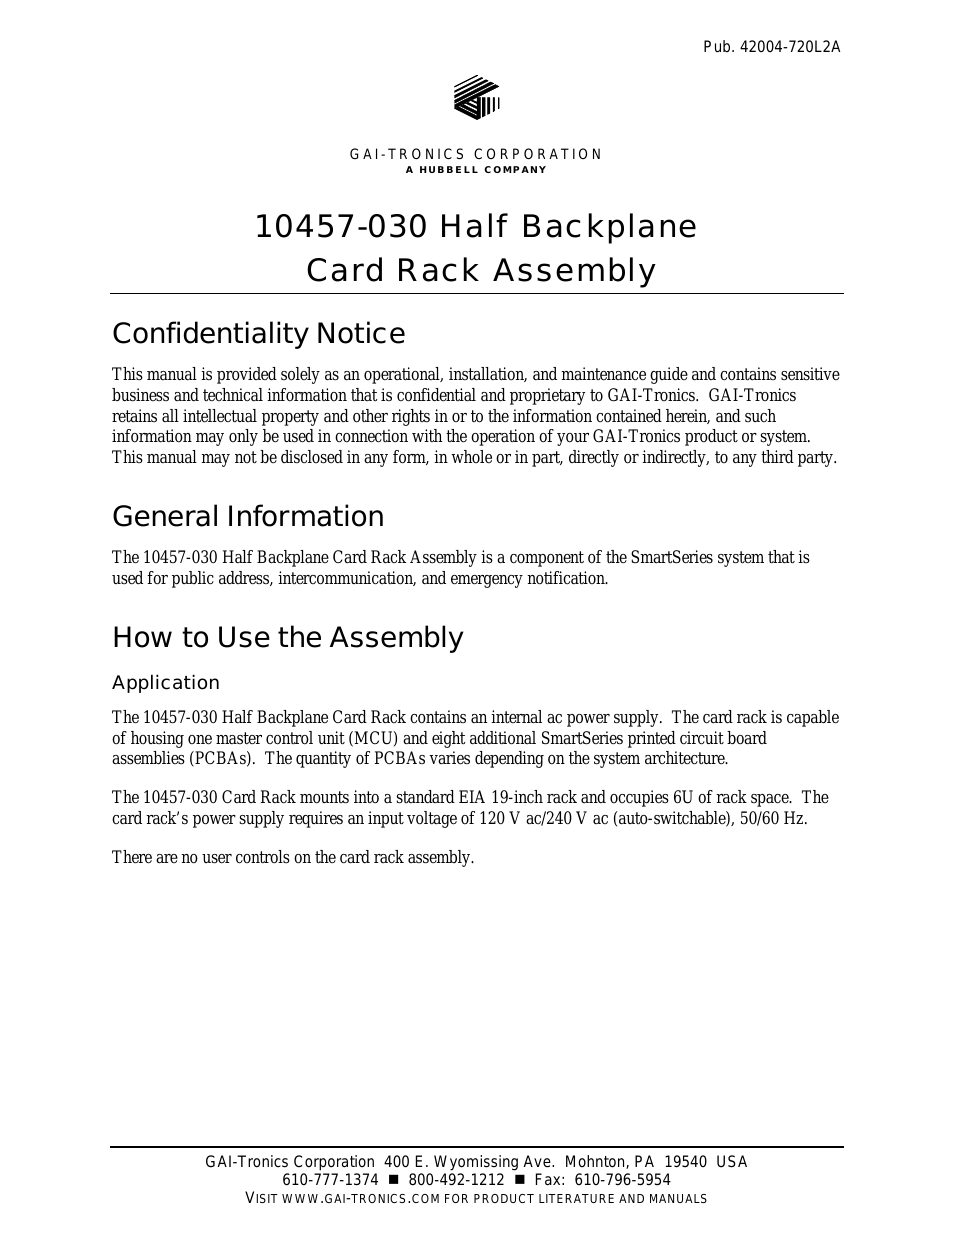 10457-030 Half Backplane Card Rack Assembly